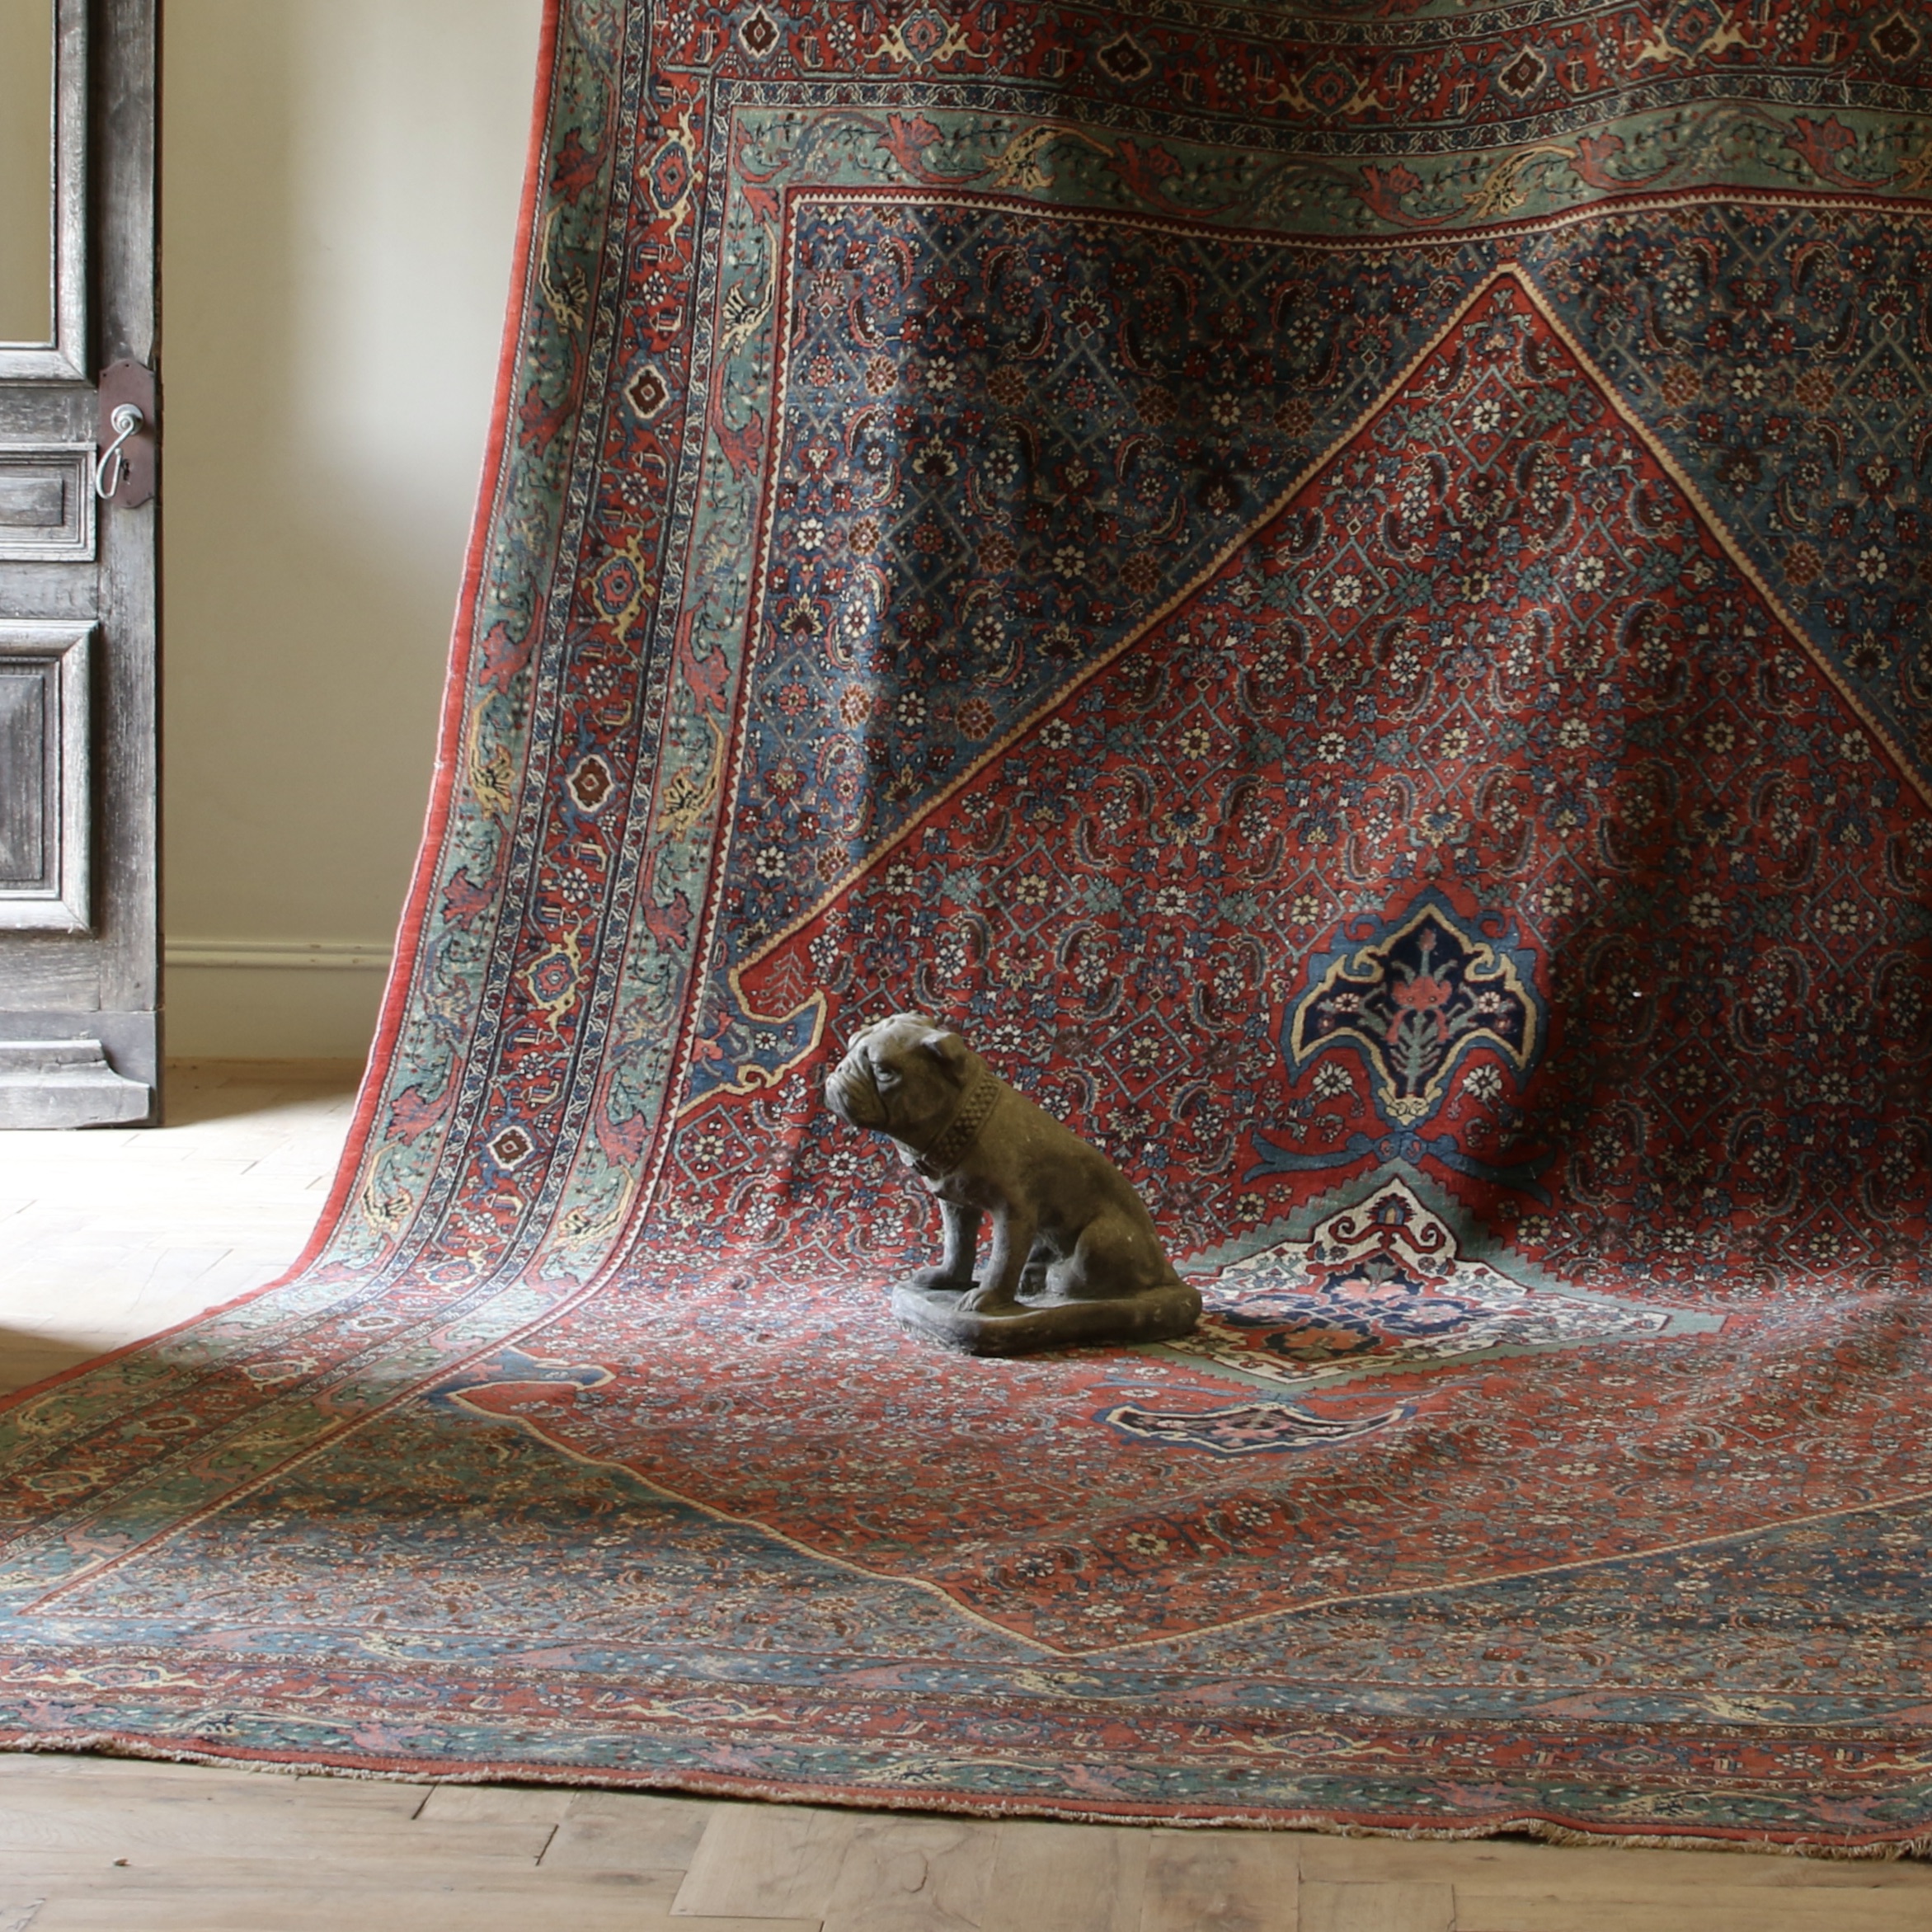 19th-Century Iranian Carpet